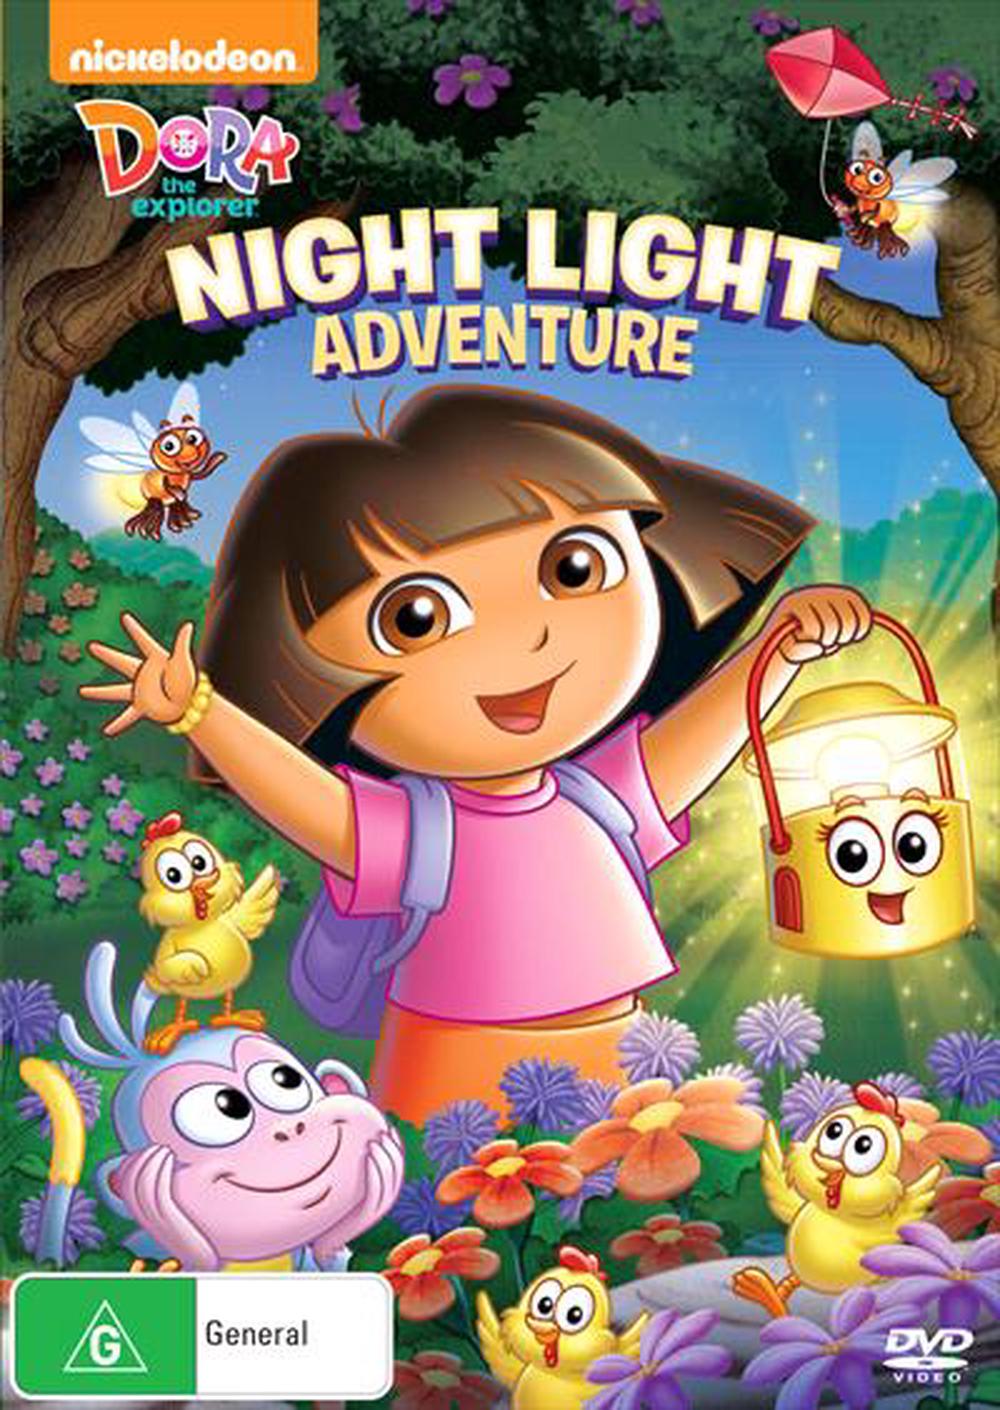 Dora The Explorer: Night Light Adventure, DVD | Buy online at The Nile